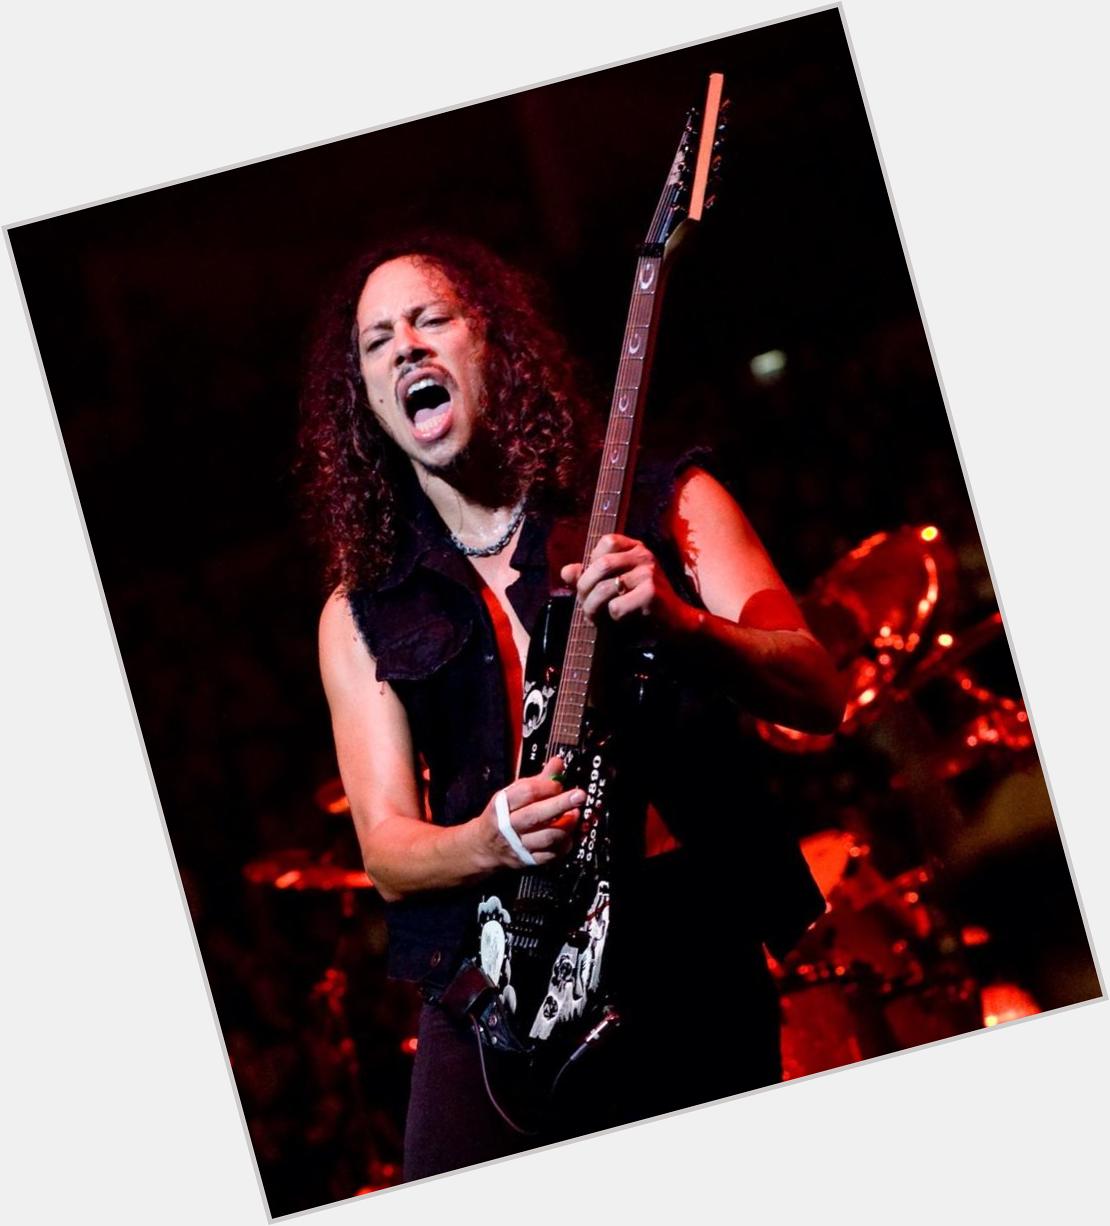 Happy birthday Metallica guitarist Kirk Hammett! 